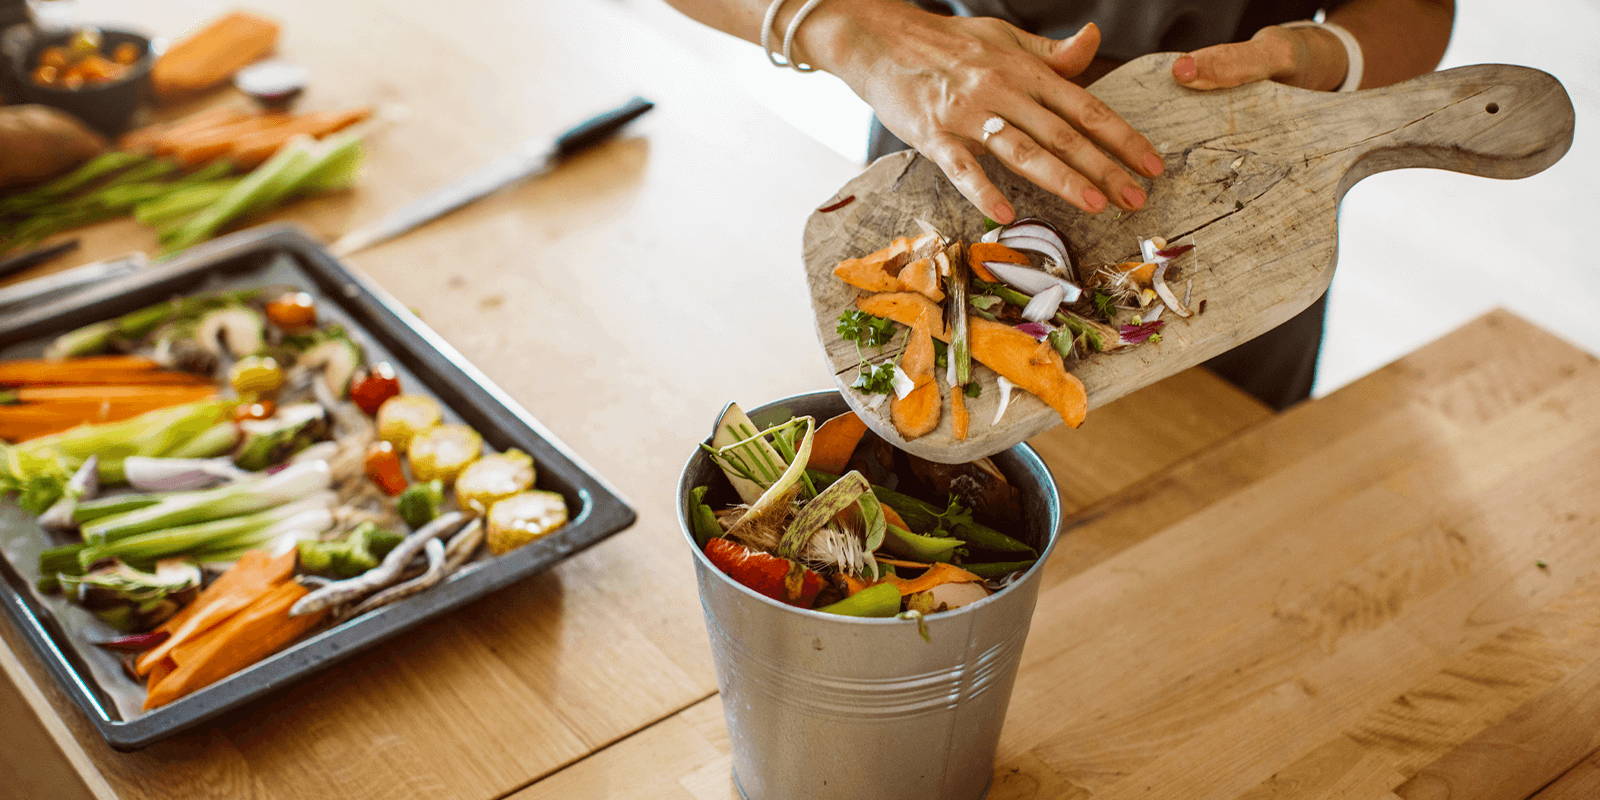 Woman putting vegetables scraps into a bin.